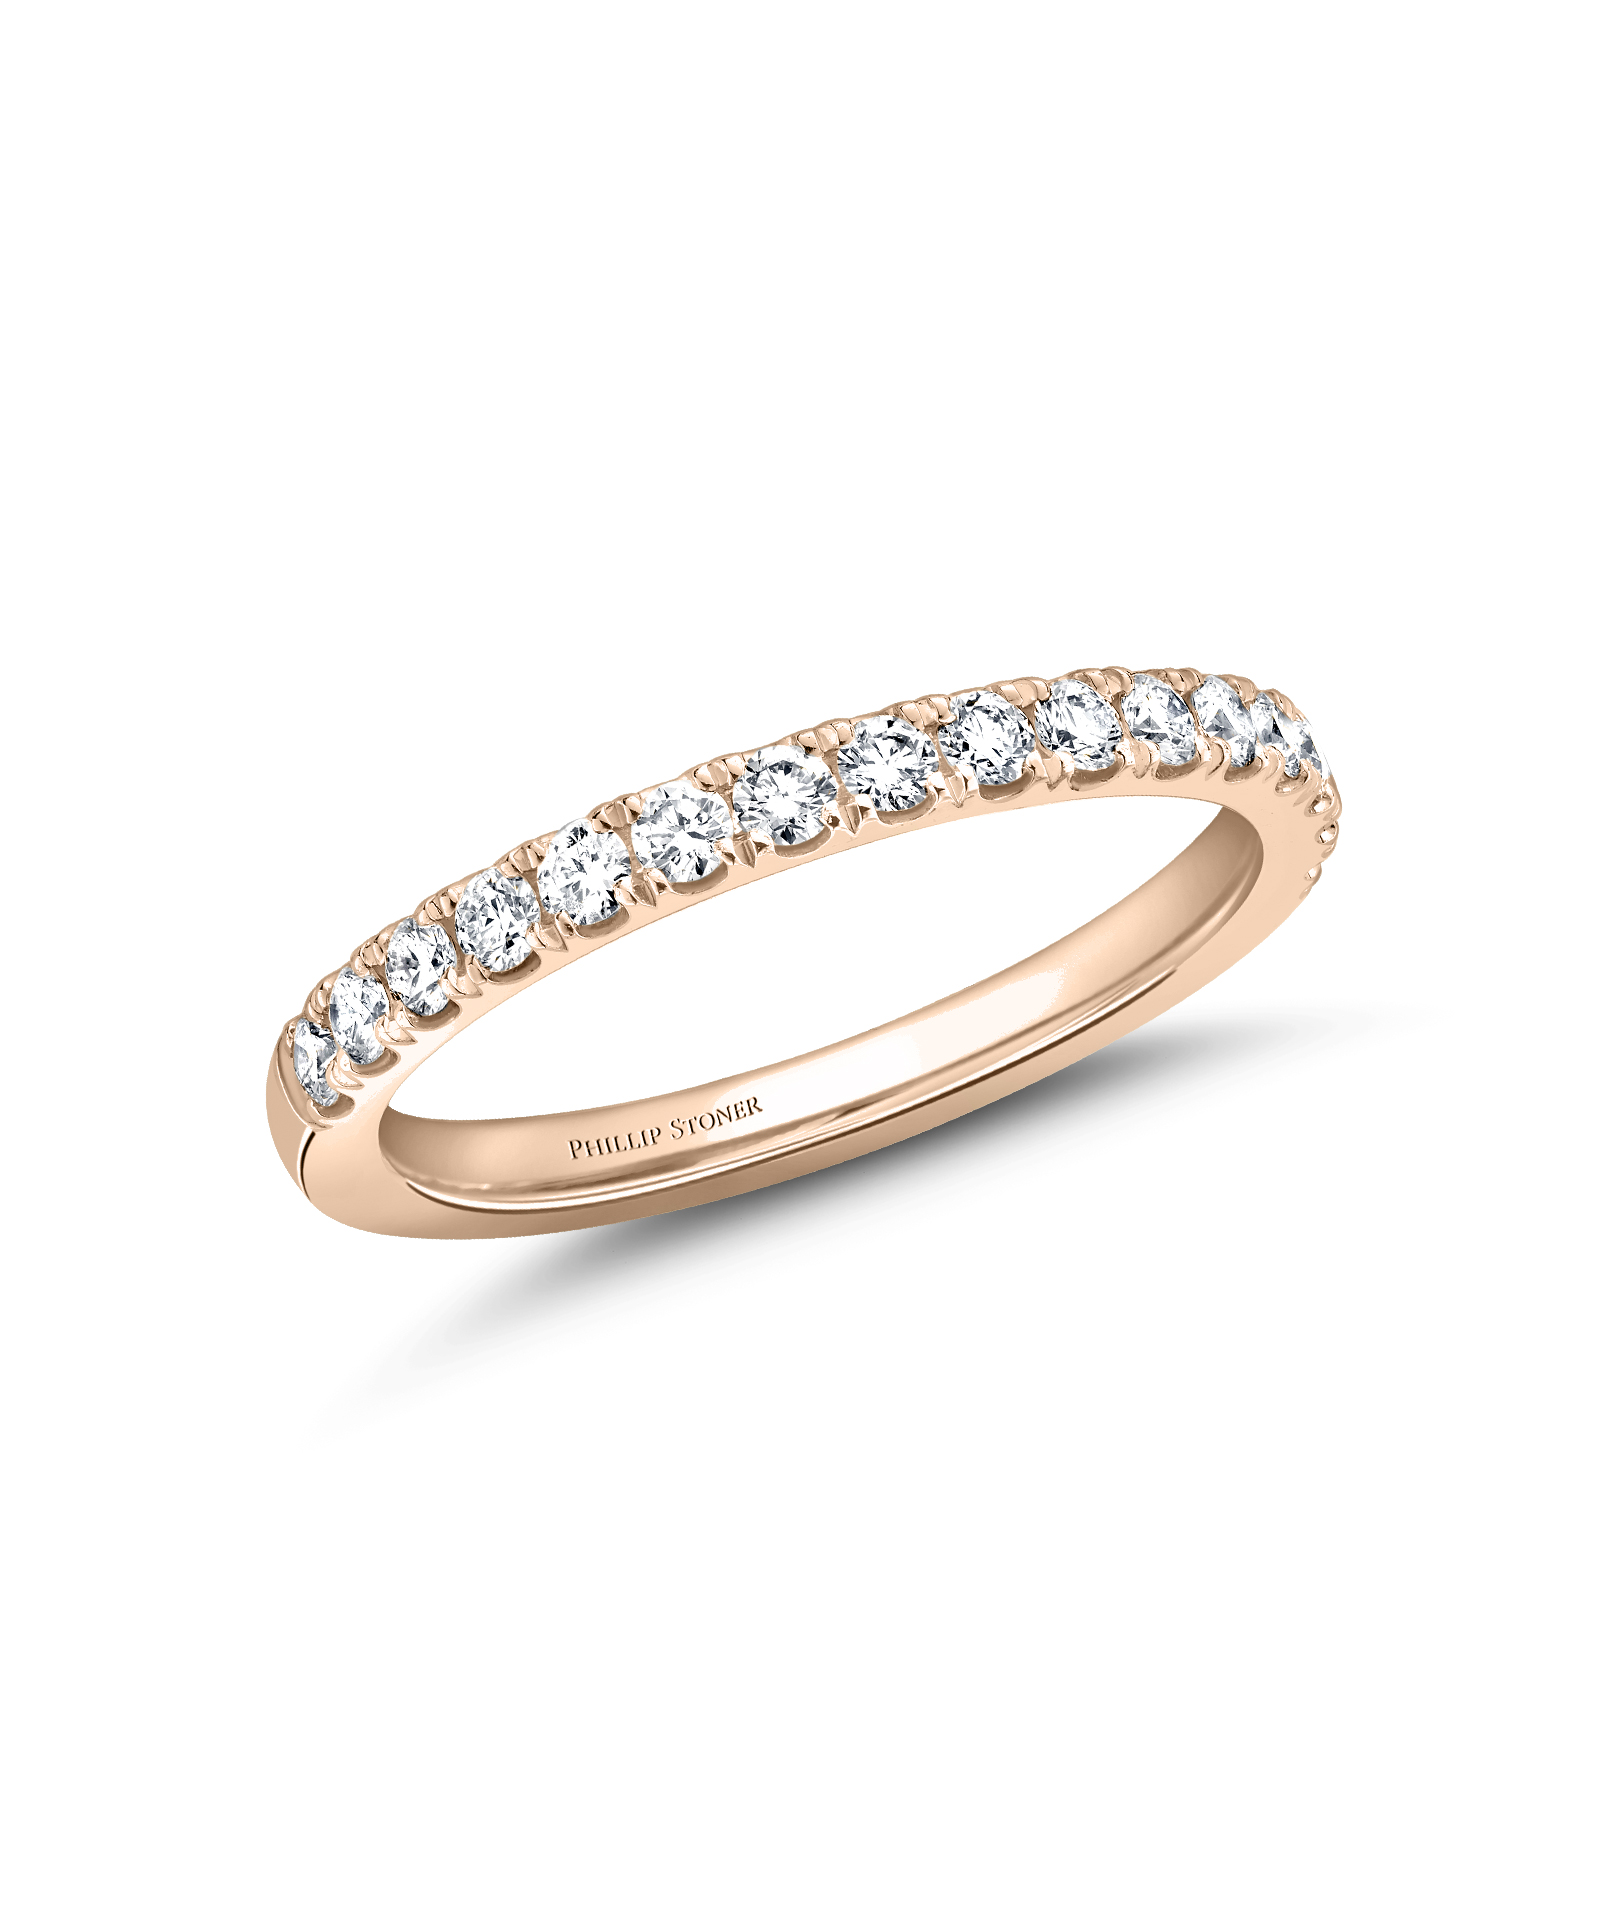 18ct Rose Gold 0.36ct Thea Diamond Wedding Ring - Phillip Stoner The Jeweller